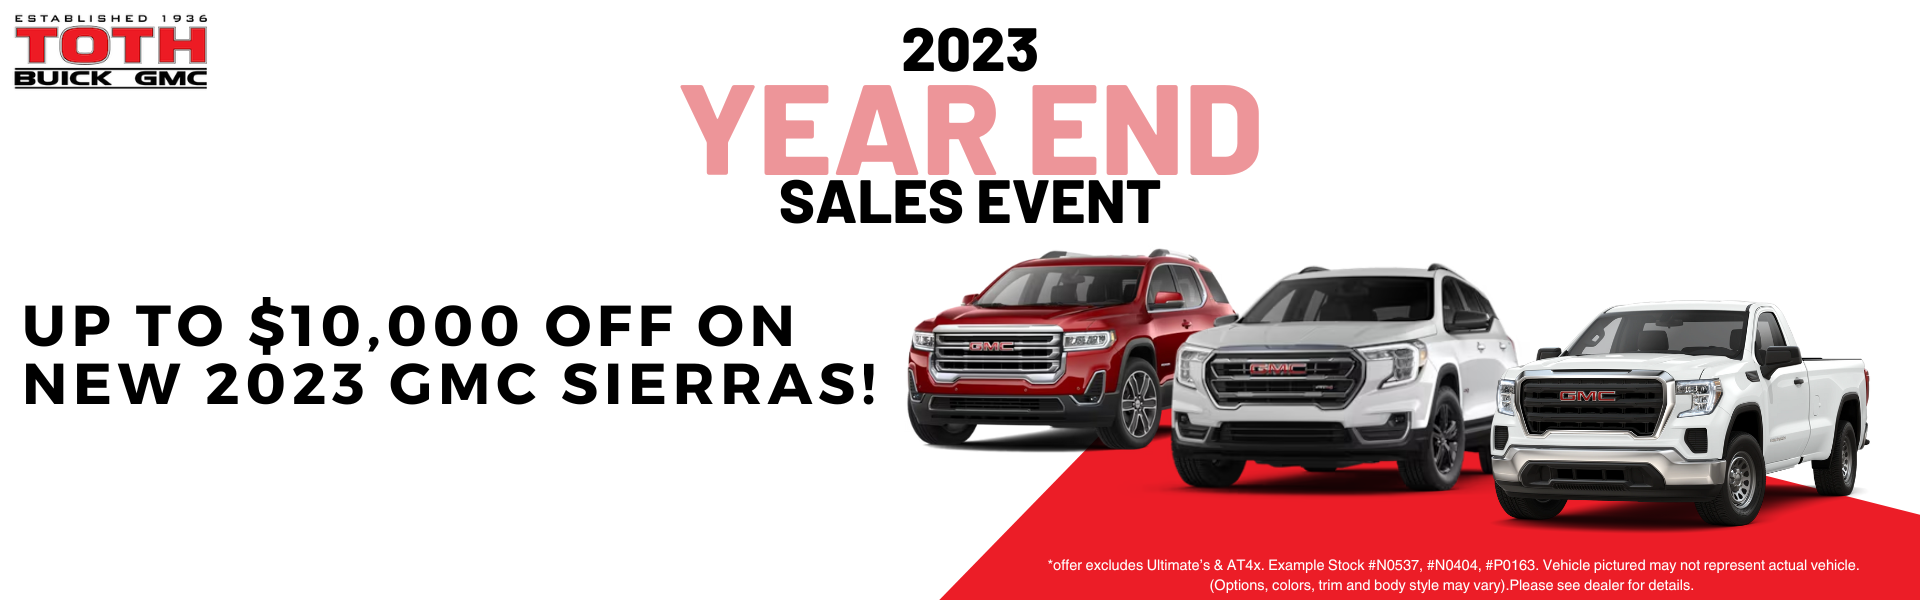 year end sale - new 2023 gmc sierras